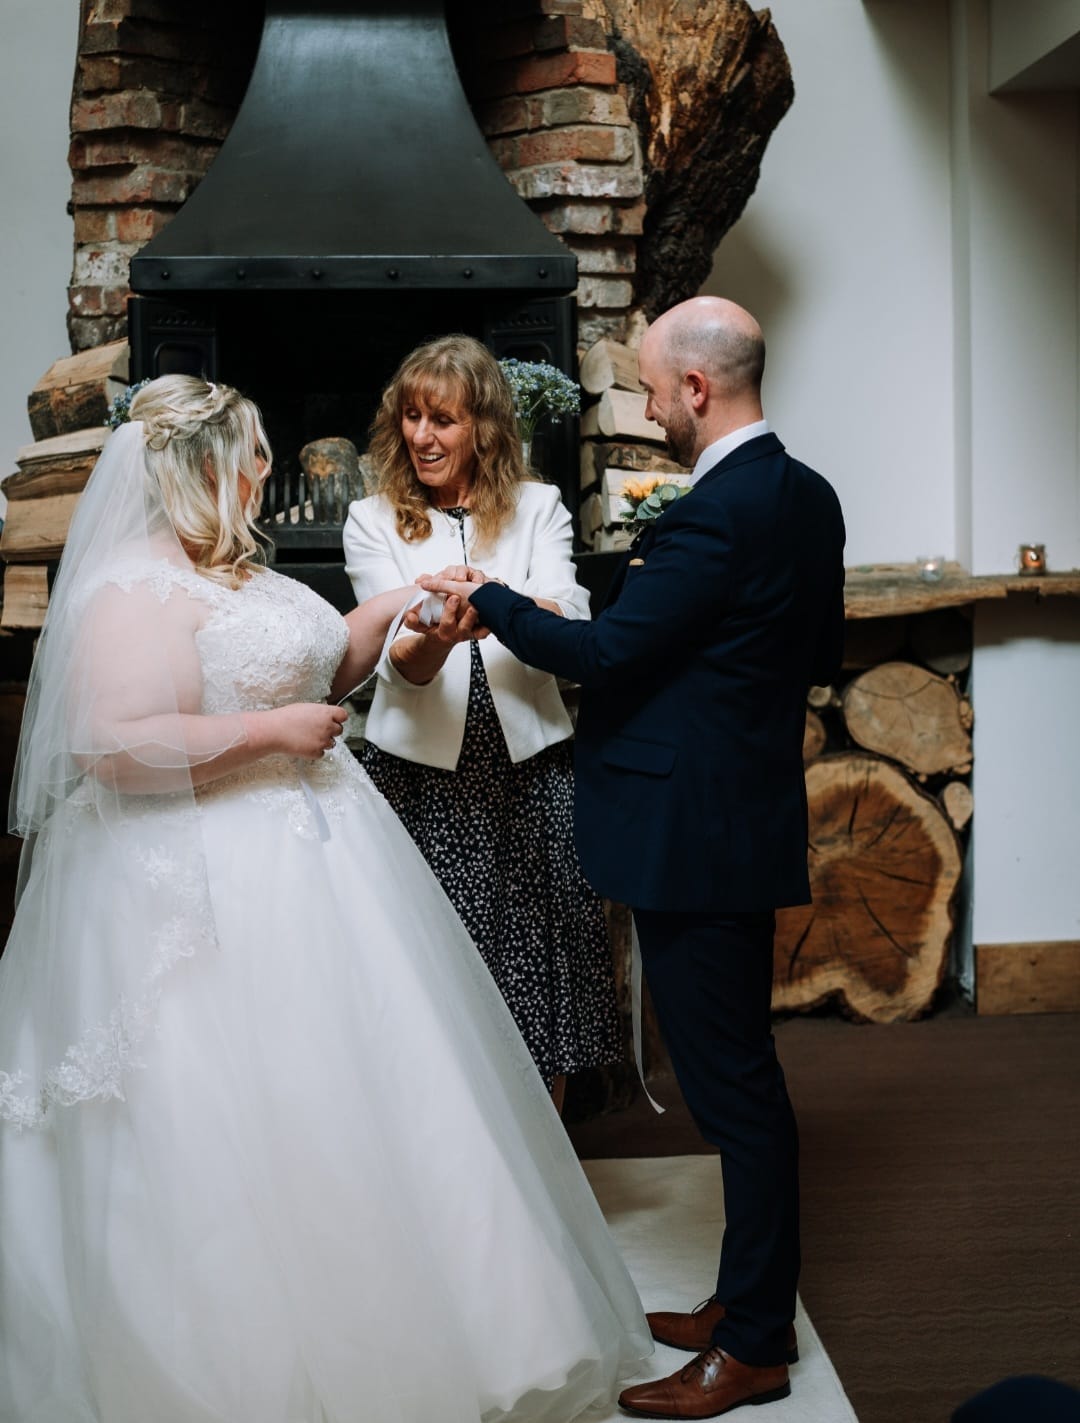 Carmarthenshire bride, groom and celebrant under a pretty floral arch